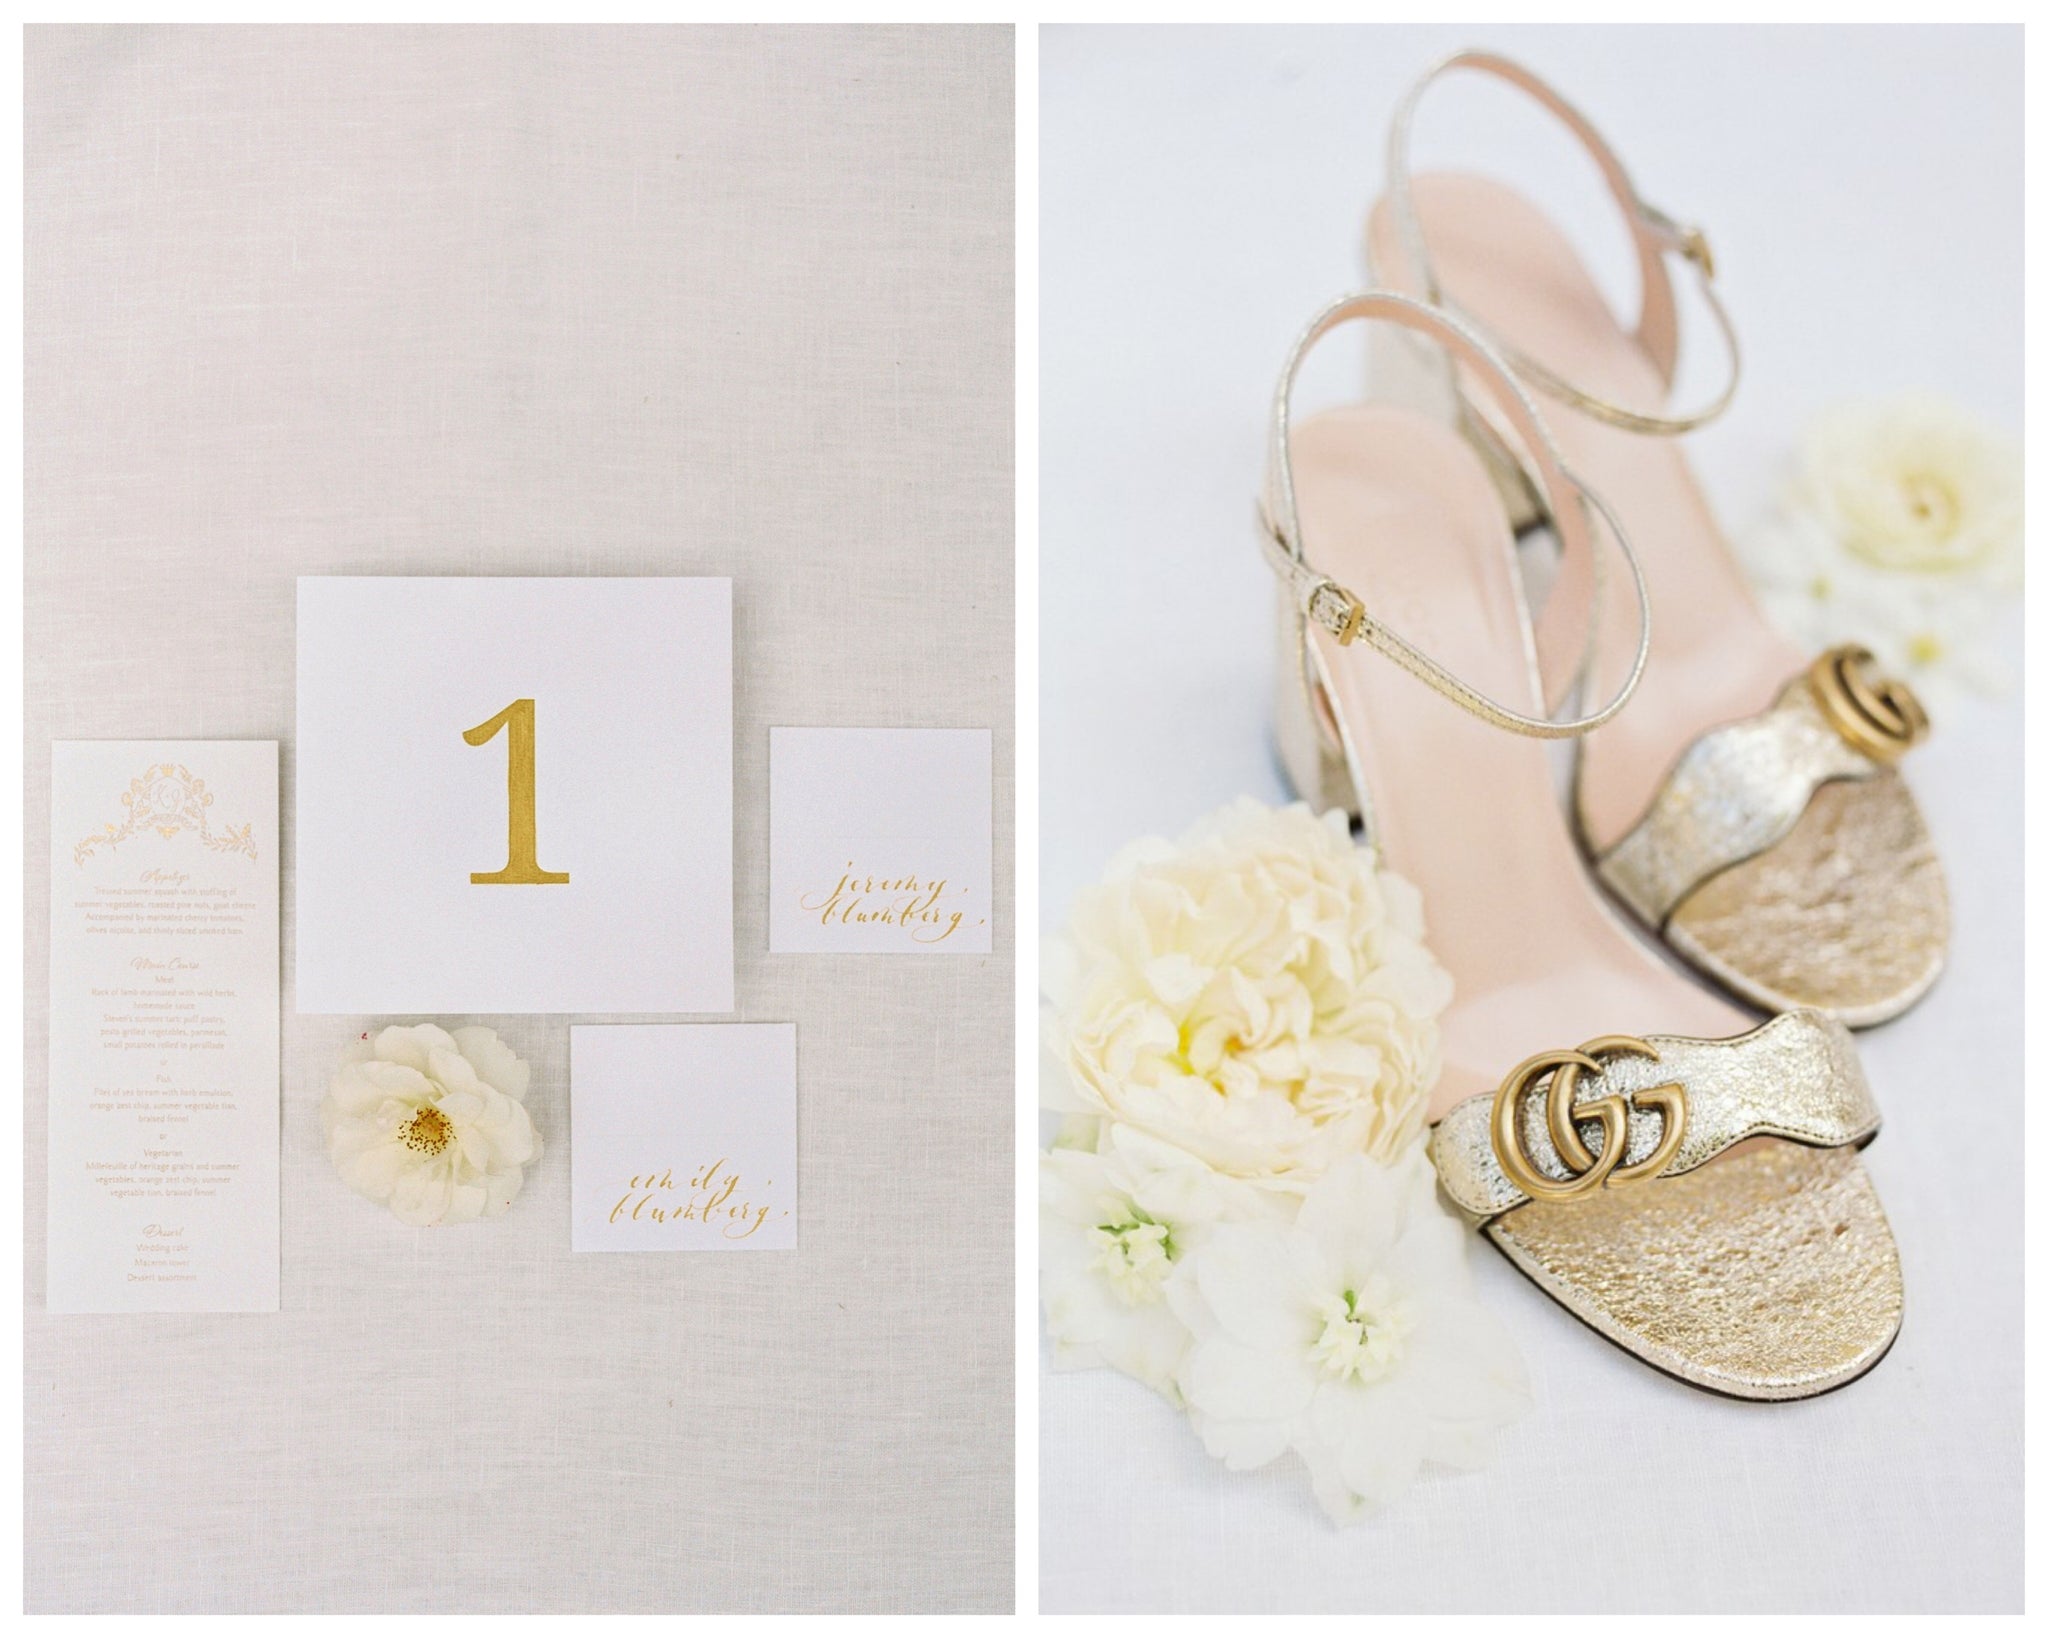 Katie Dean Jewelry romantic destination wedding at a chateau, Provence, France, paper goods + shoes, details